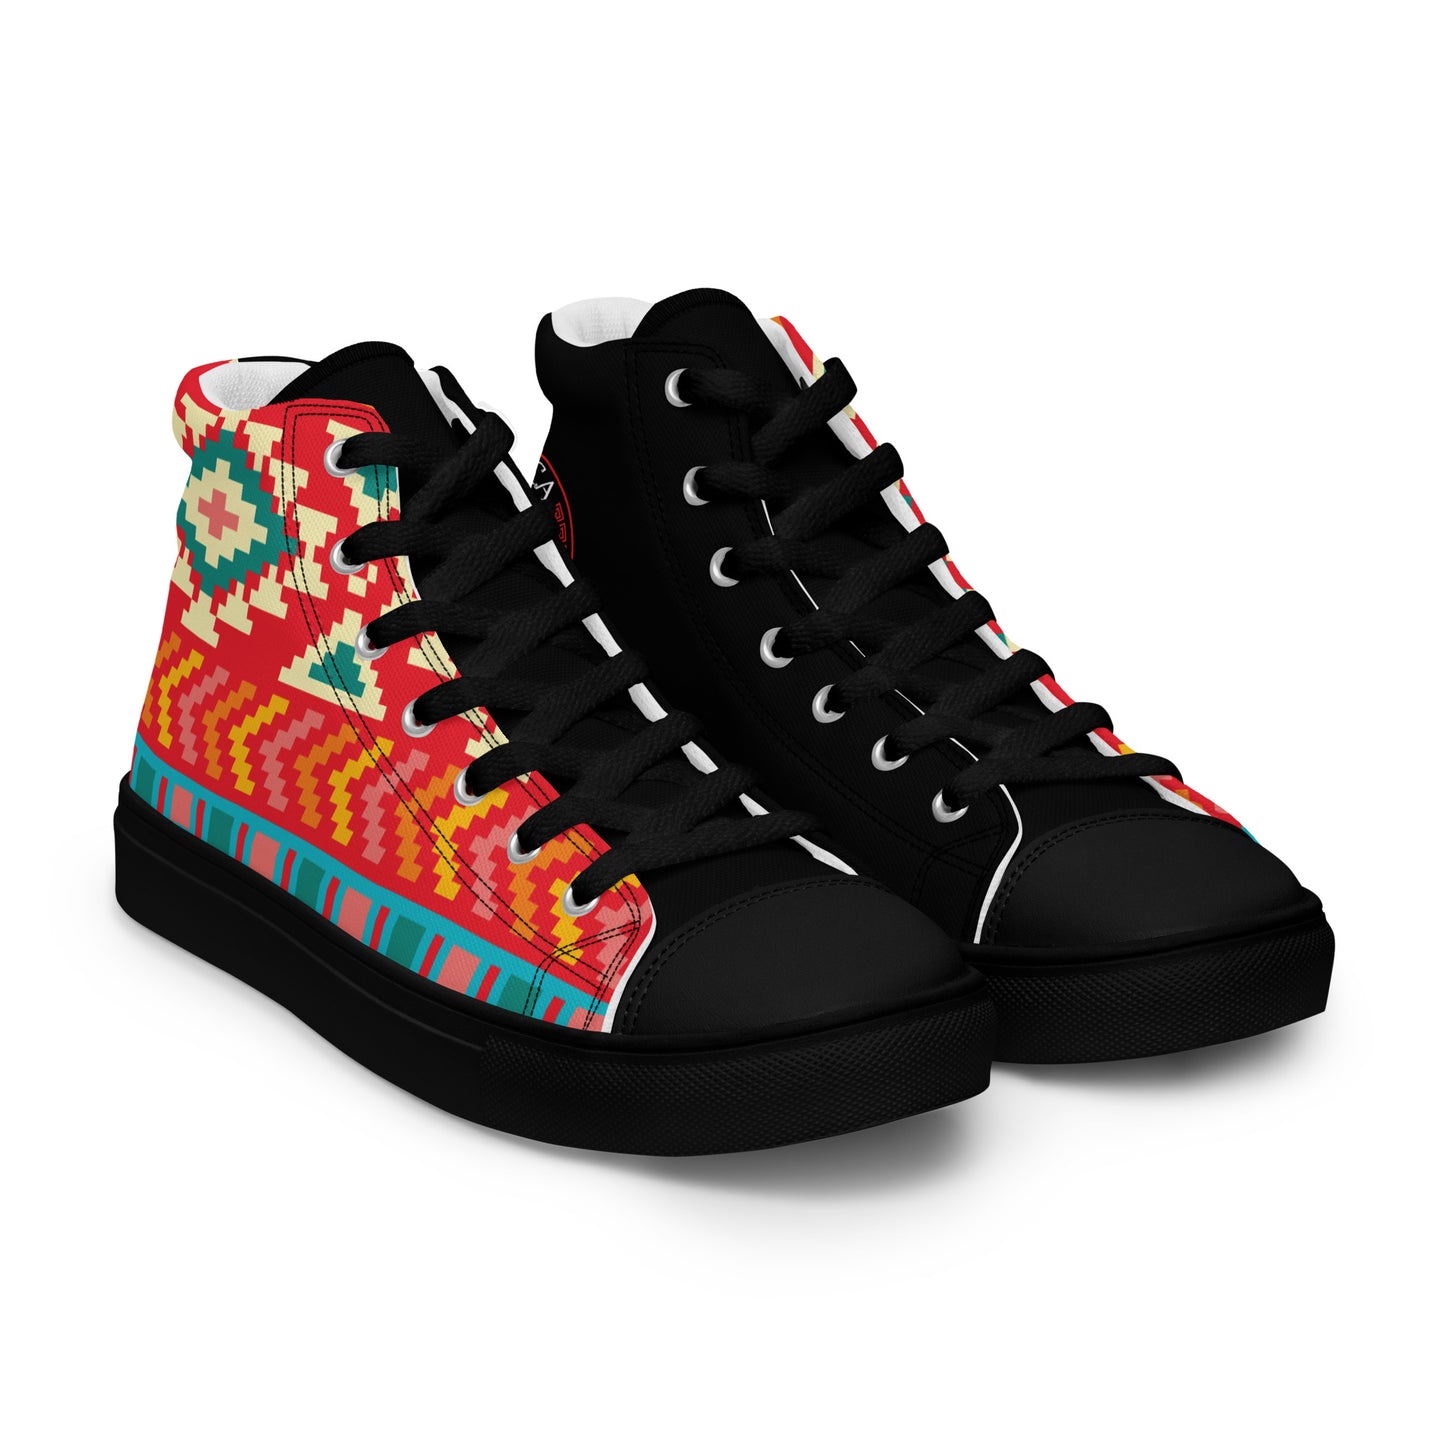 Diseño Nuscaa - Women - Black - High top shoes